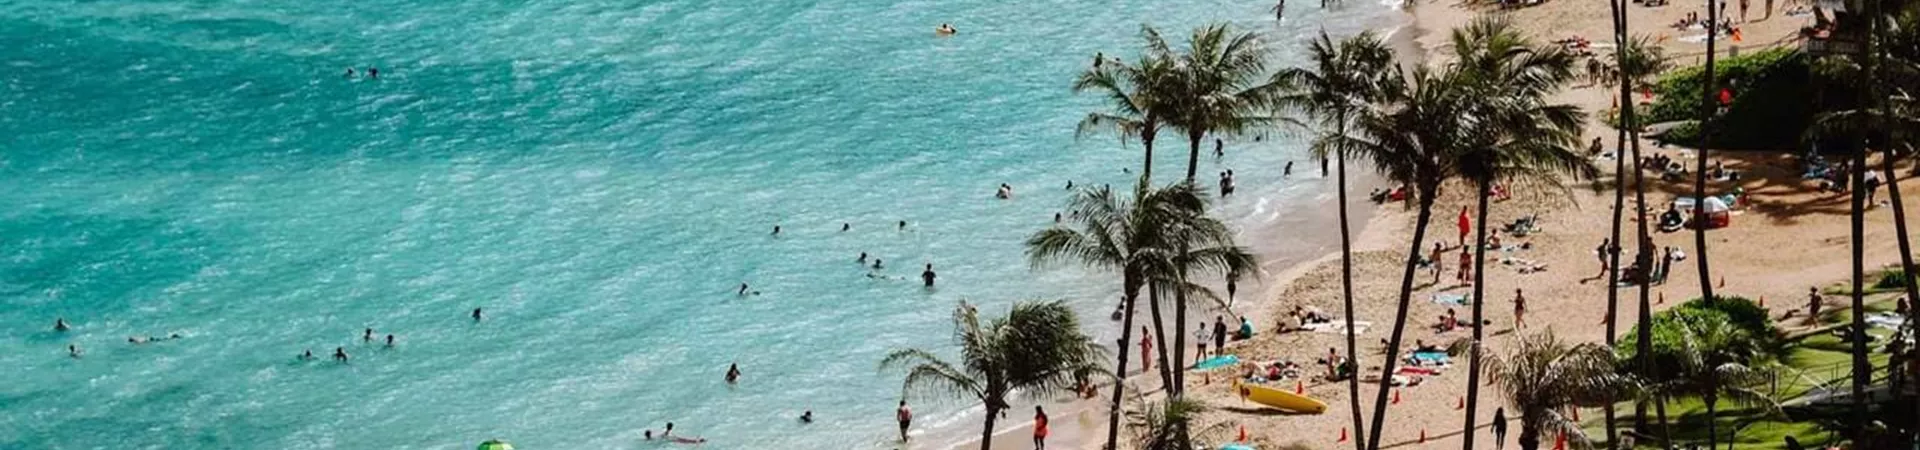 Hawaian landscape, beach with palmtrees